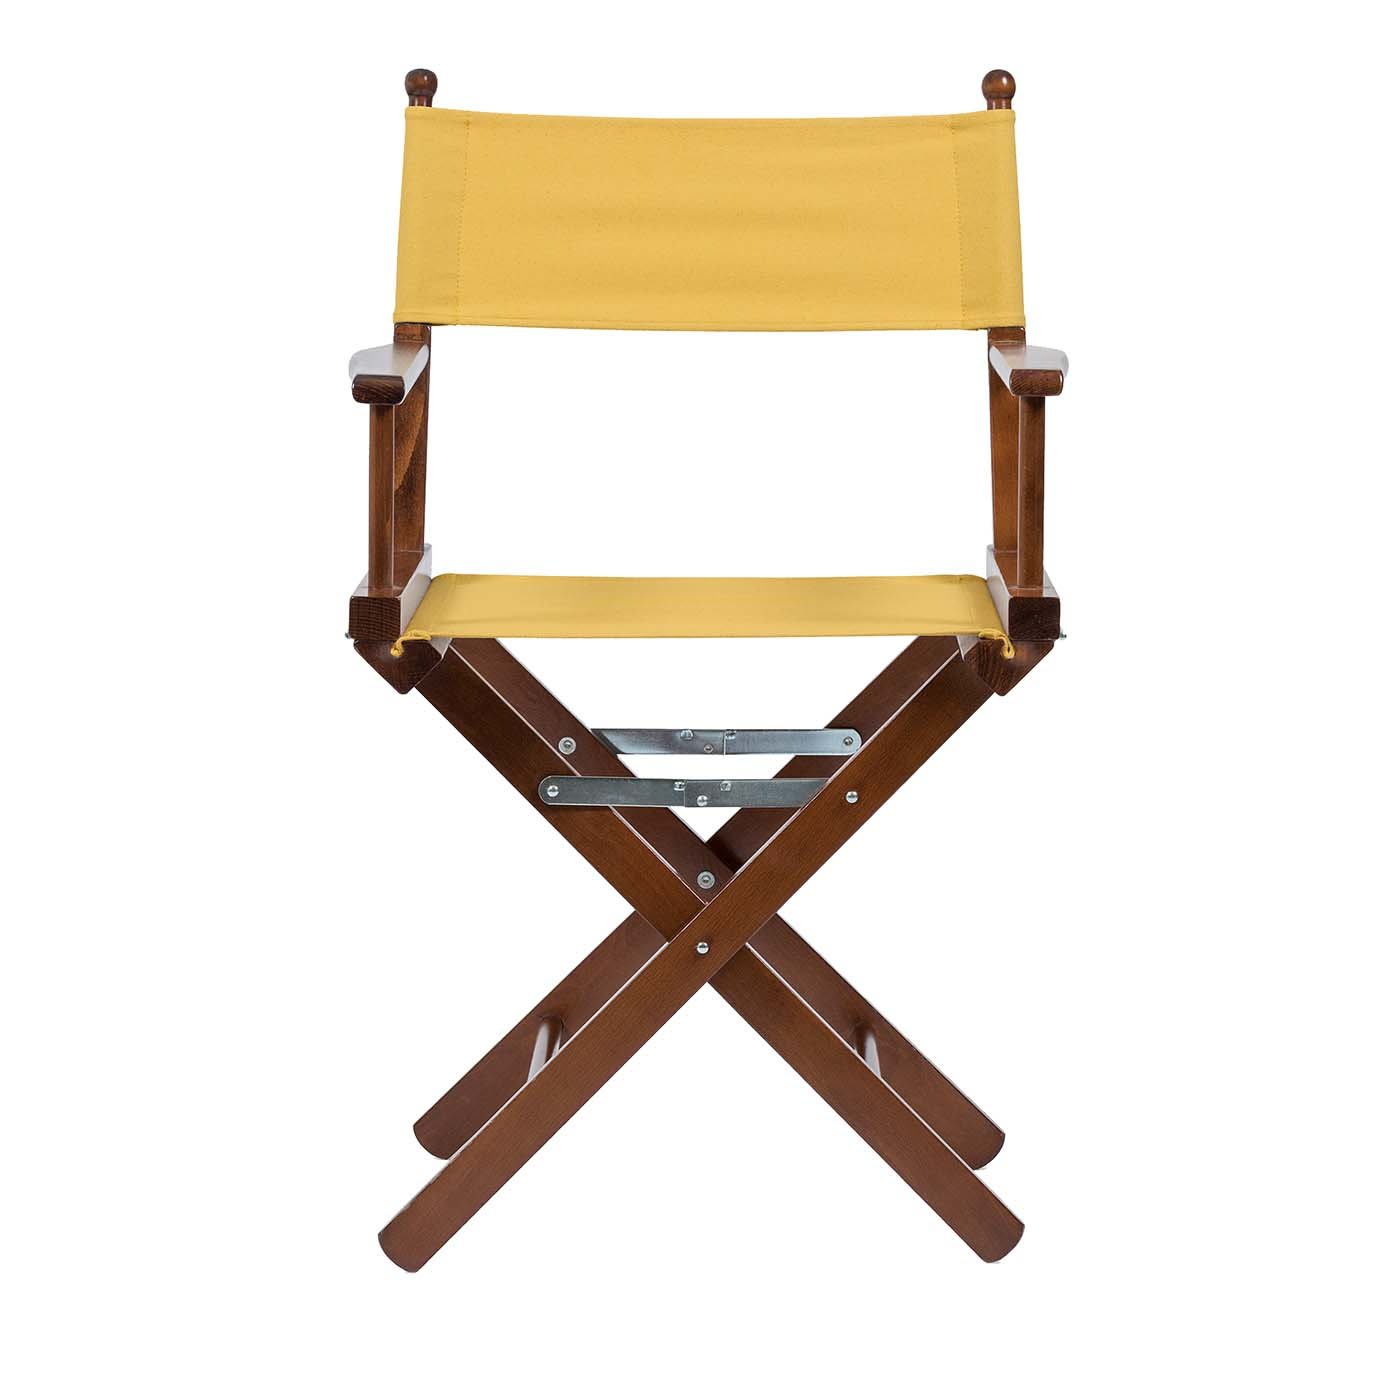 Director's Chair in Mustard Yellow - Telami